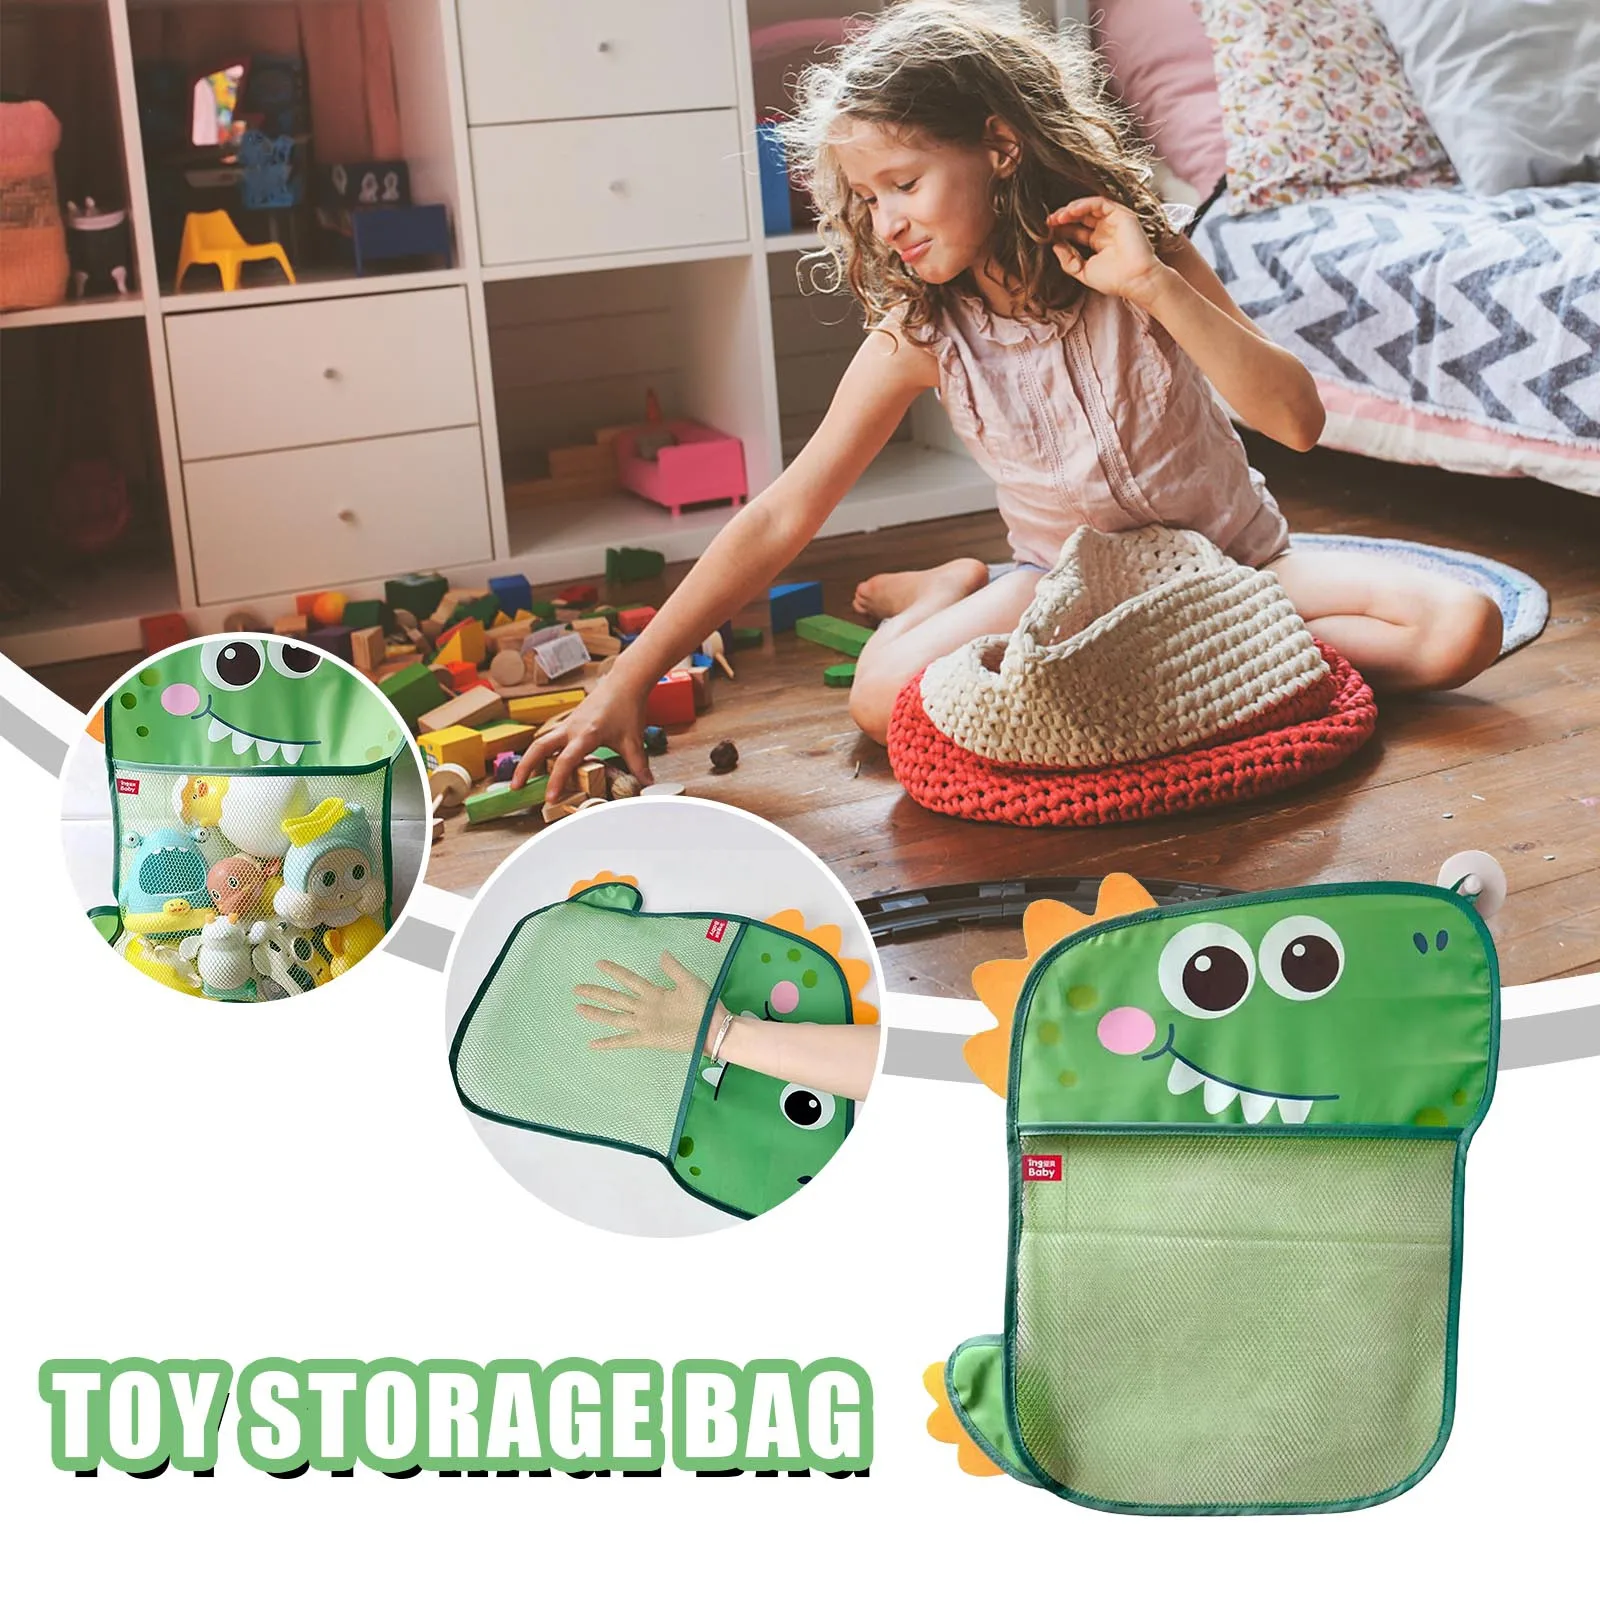 https://ae01.alicdn.com/kf/S69e16c28d2b8427099c34154c7c9416cy/Baby-Bath-Toys-Cute-Duck-Dinosaur-Mesh-Net-Storage-Bag-Strong-Suction-Cups-Bath-Game-Bag.jpg